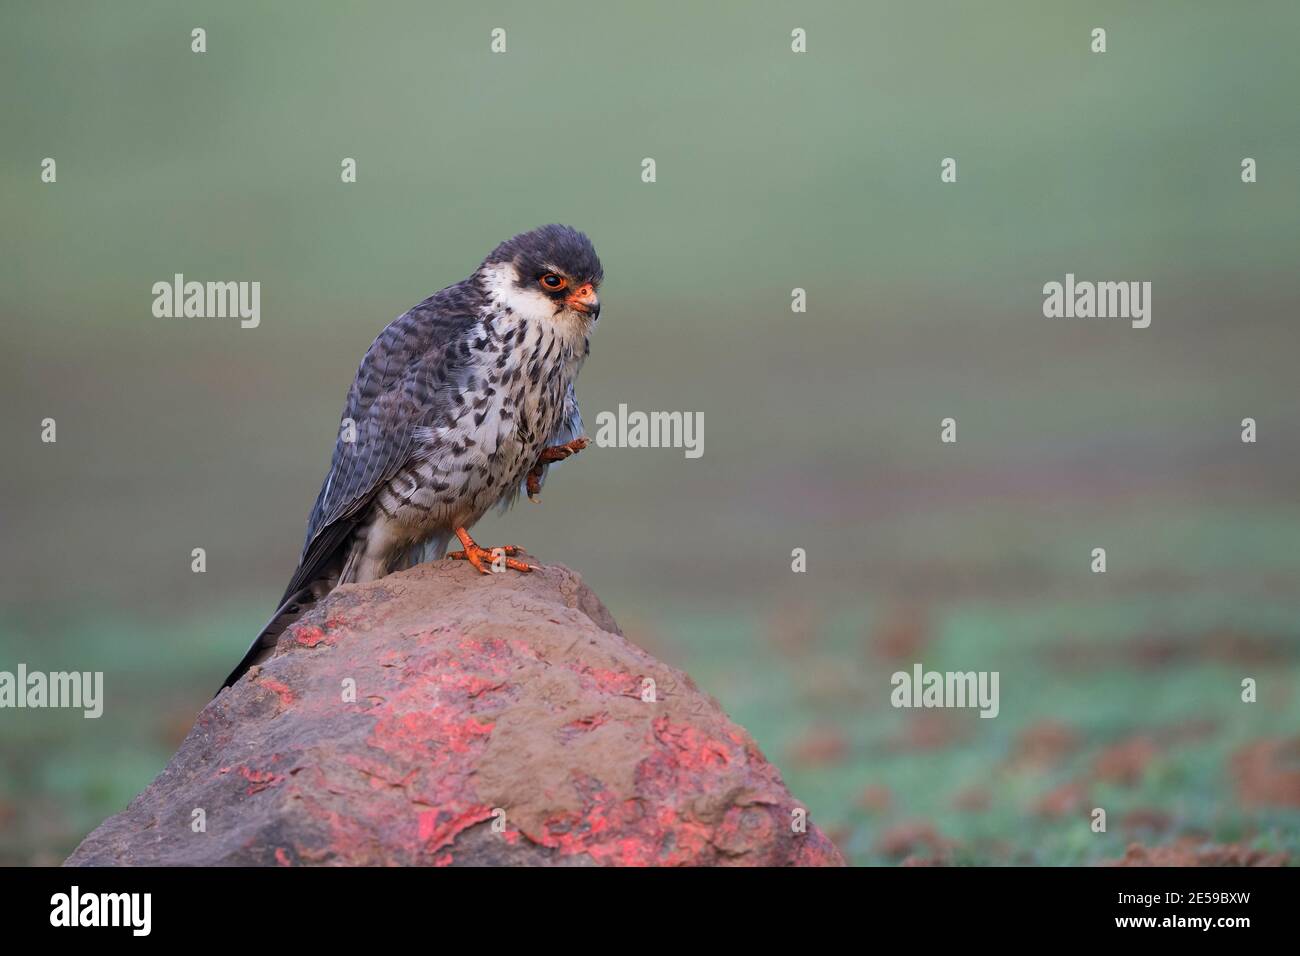 The image of Amur falcon (Falco amurensis) was taken at Lonavala, Maharashtra, India Stock Photo